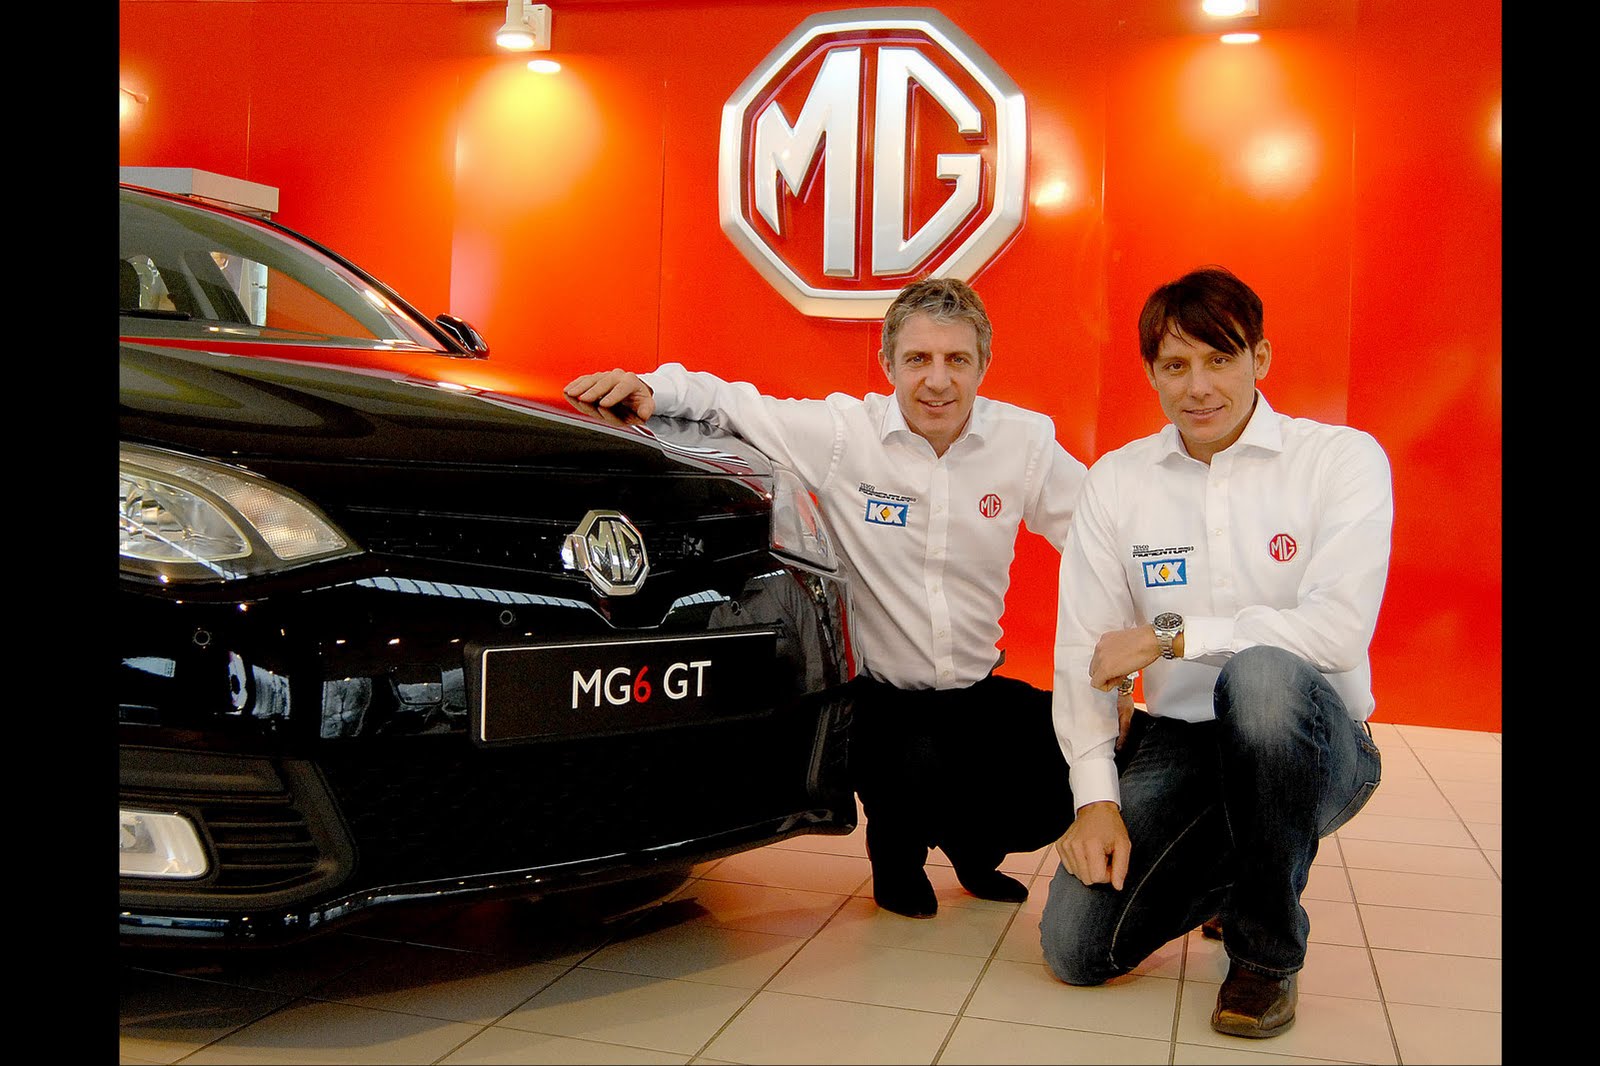 MG returns to BTCC